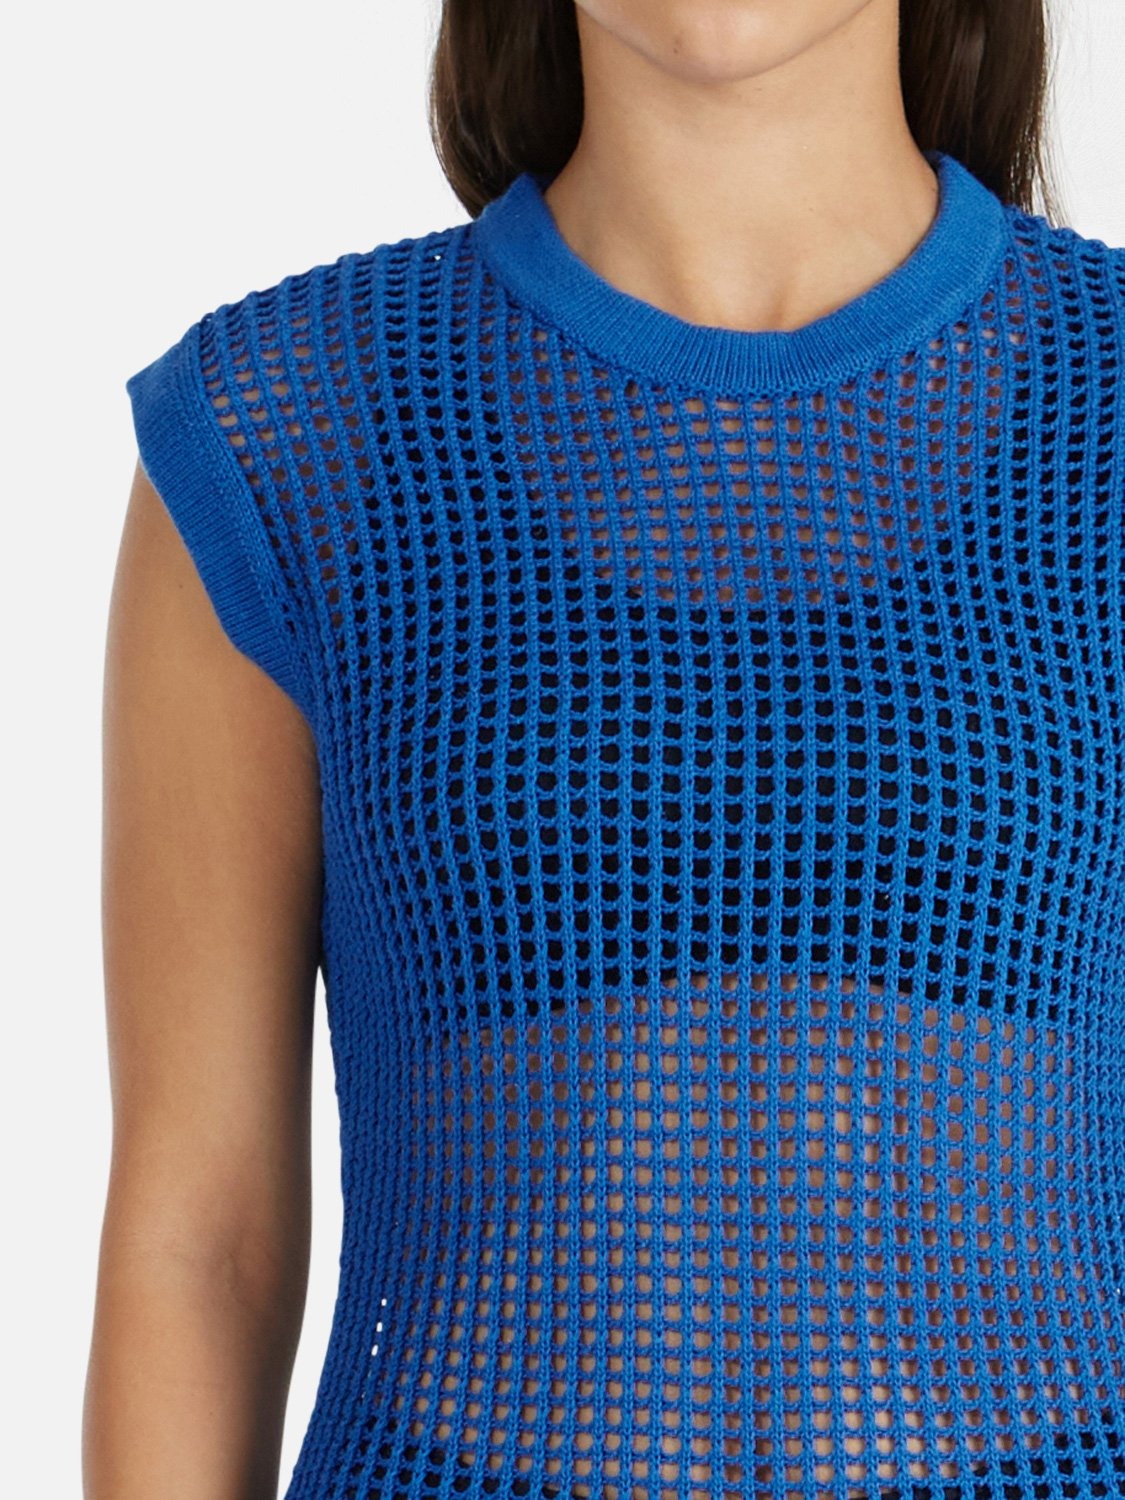 Ena Pelly | Demi Knit Maxi Dress - Blue